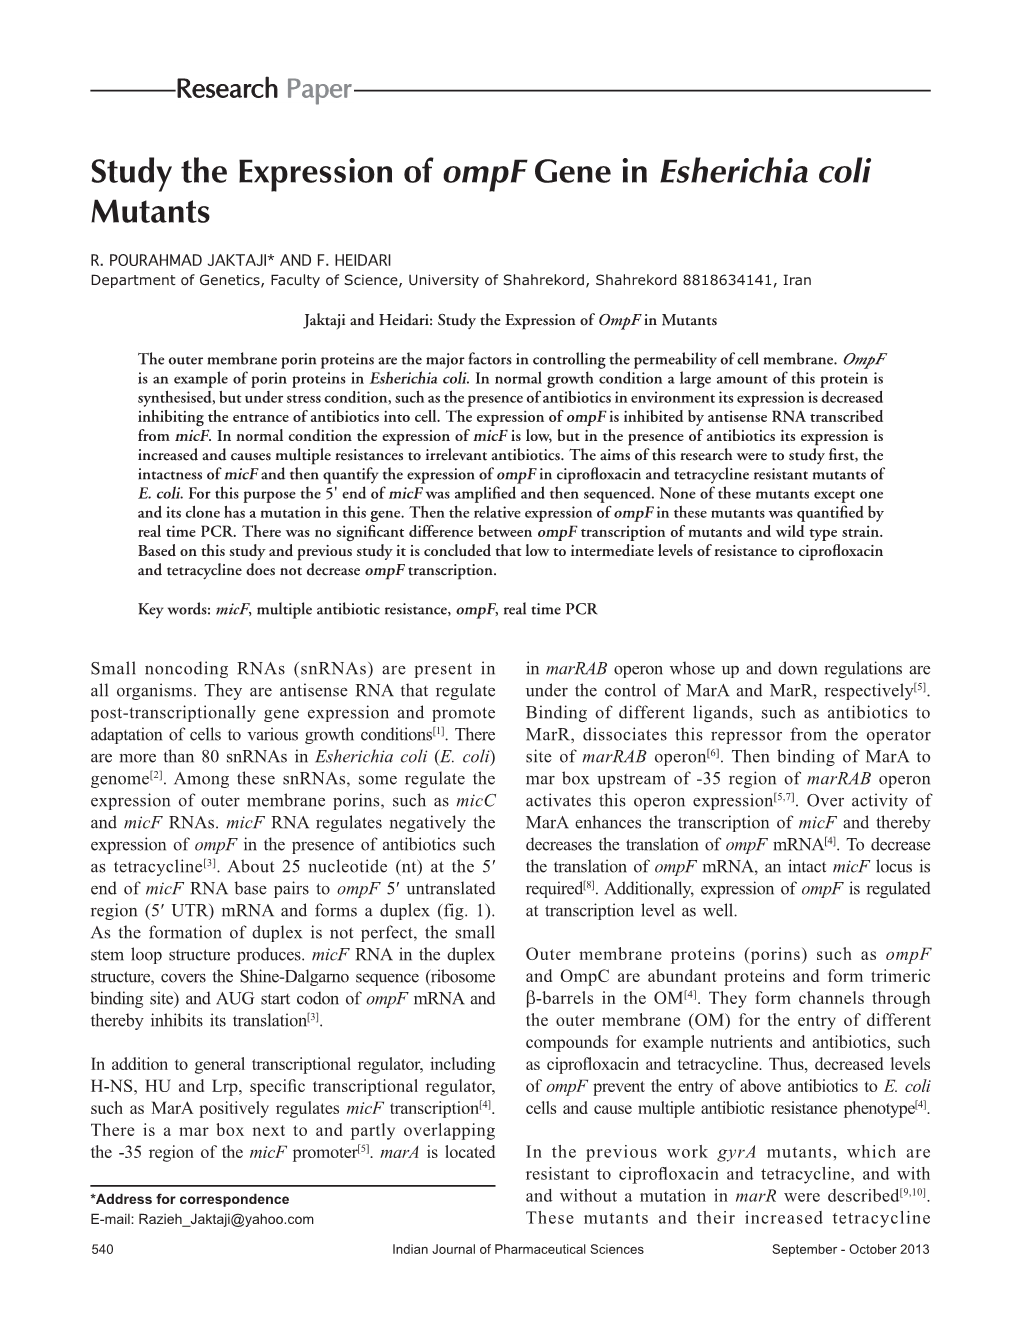 Study the Expression of Ompf Gene in Esherichia Coli Mutants